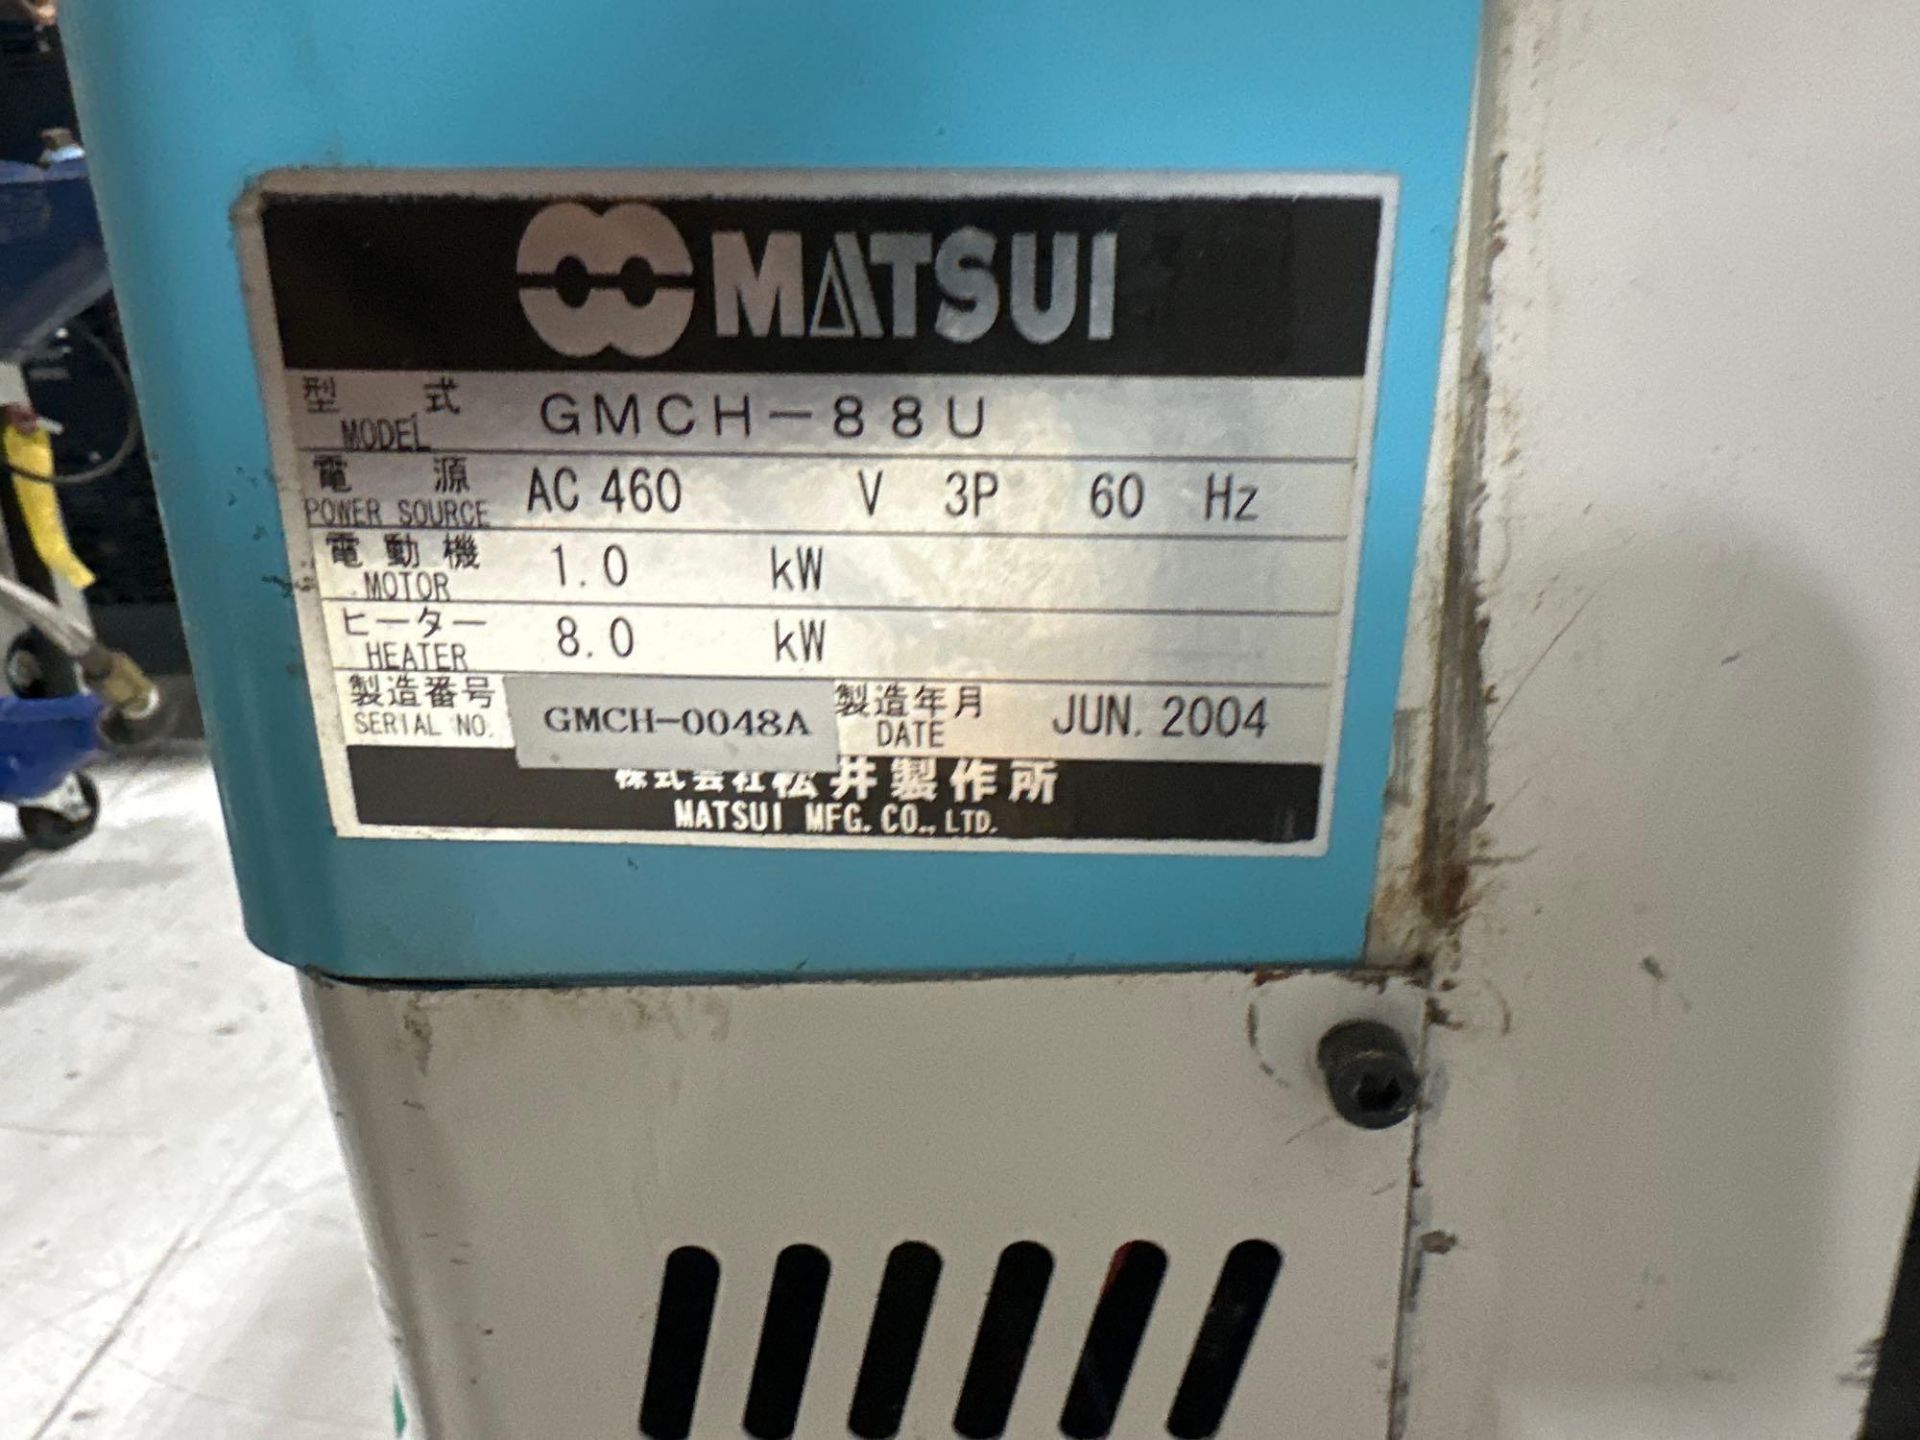 Matsui GMCH-88U Thermolator, s/n GMCH-0048A - Image 4 of 4